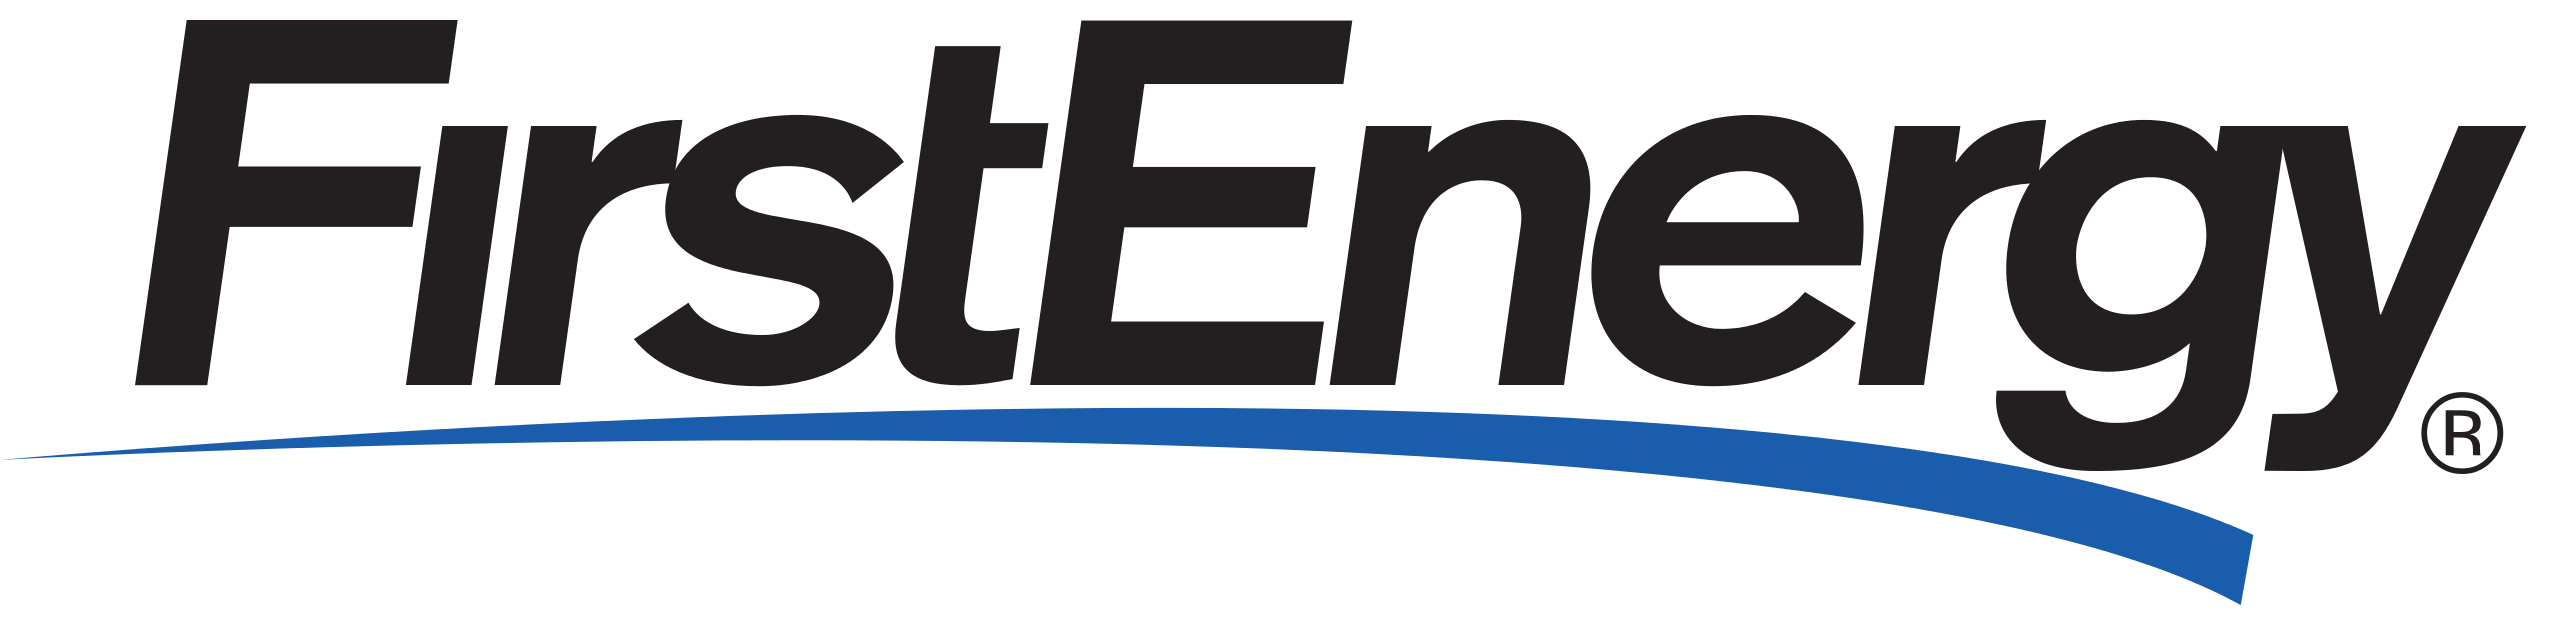 FirstEnergy Logo.svg